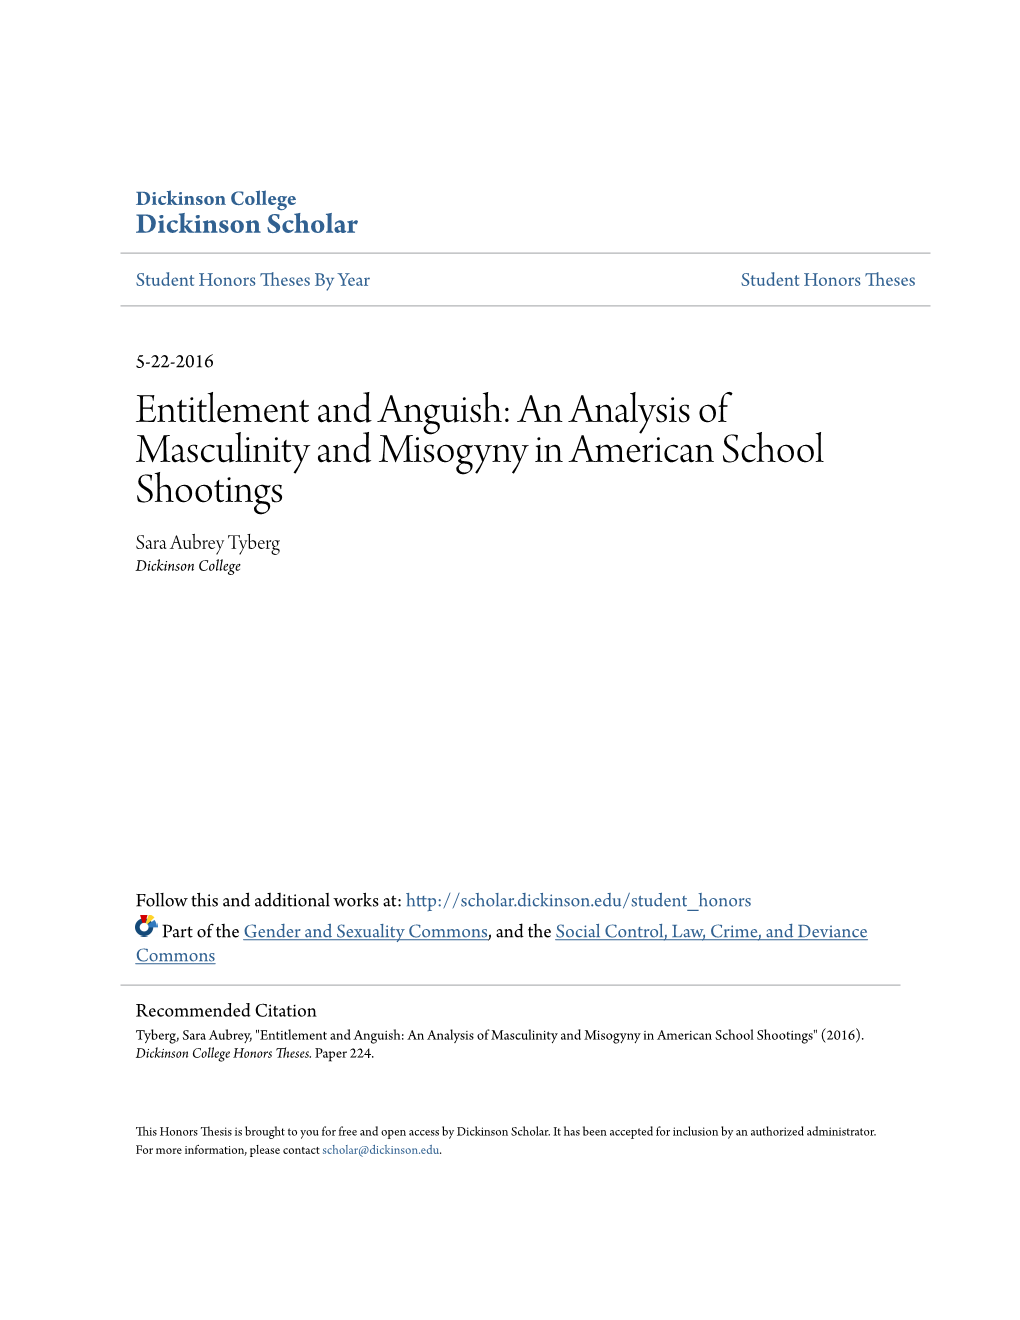 An Analysis of Masculinity and Misogyny in American School Shootings Sara Aubrey Tyberg Dickinson College